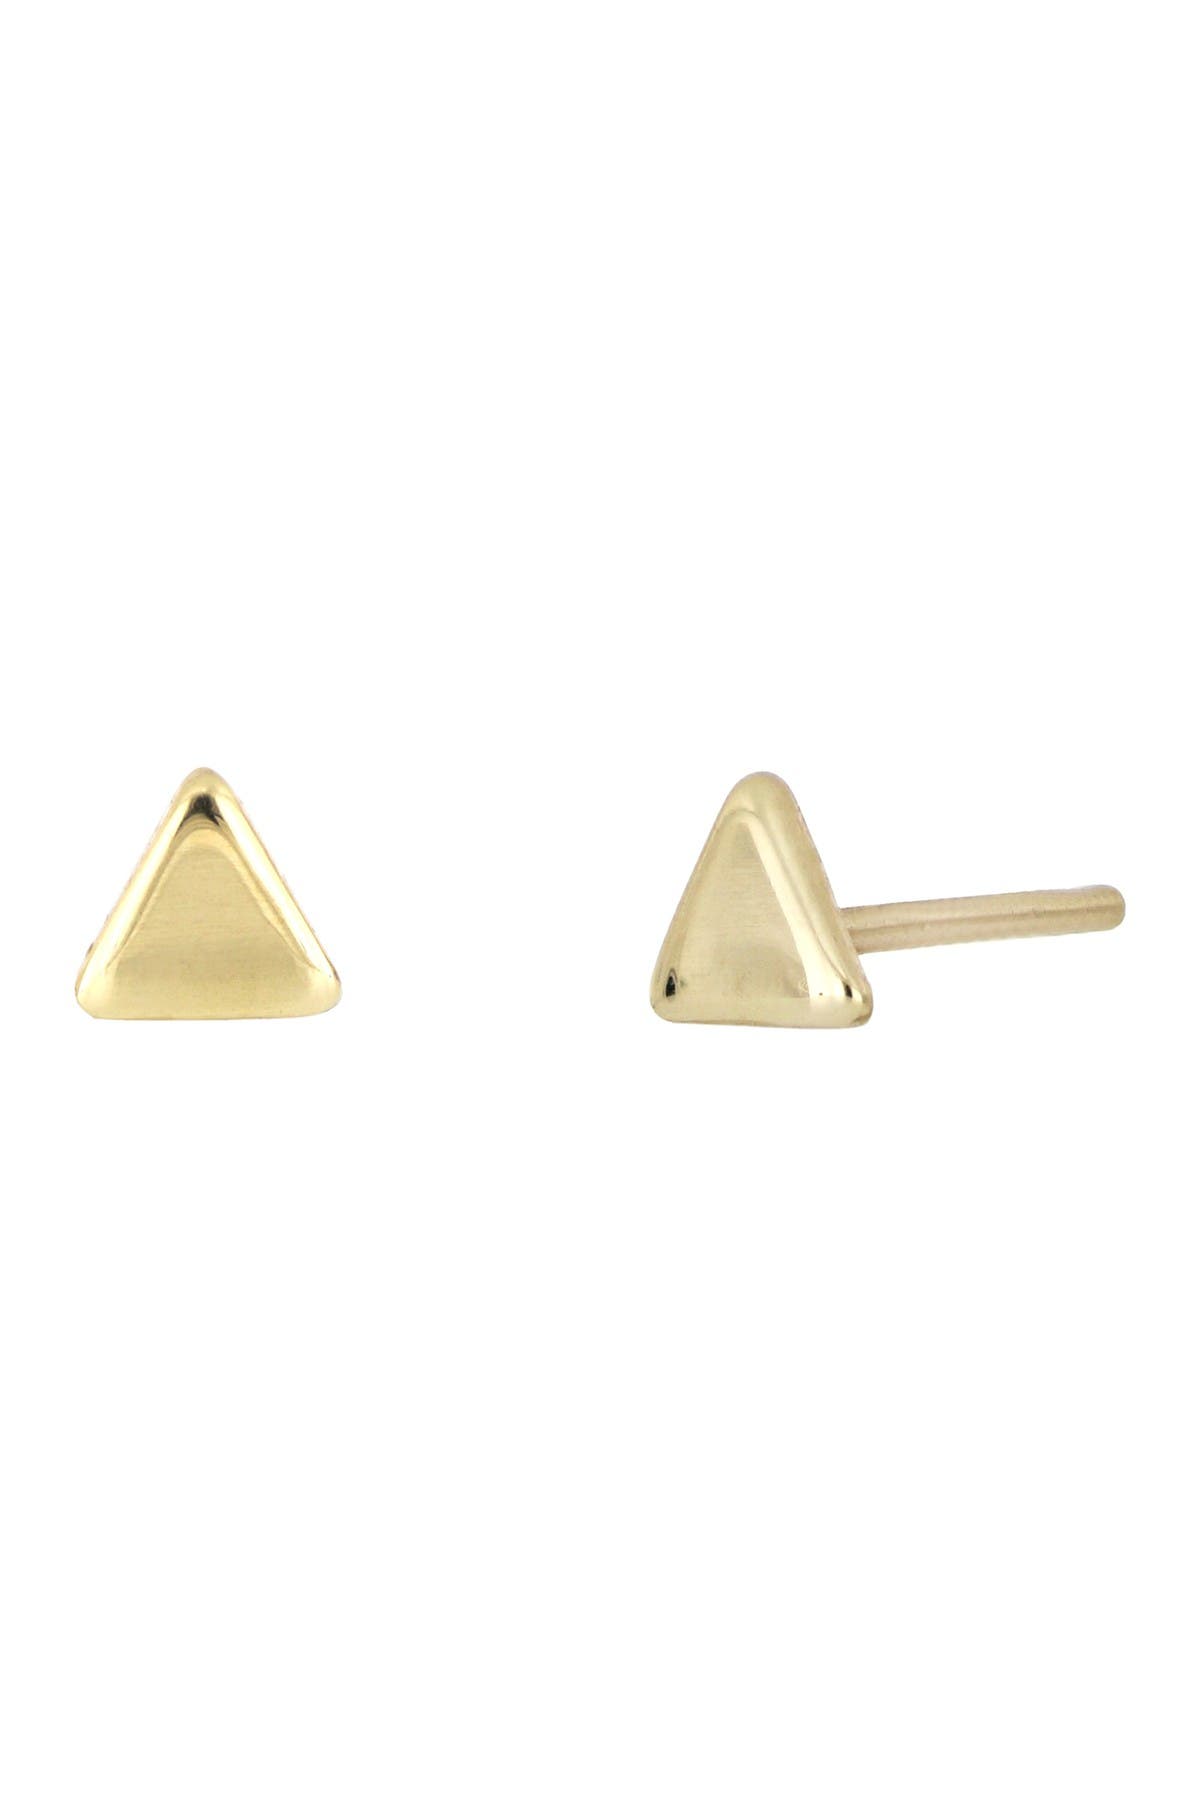 Details about  / 14k Yellow Gold Polished 0.24/"Length x 0.28/" Width Geometric Shape Earrings